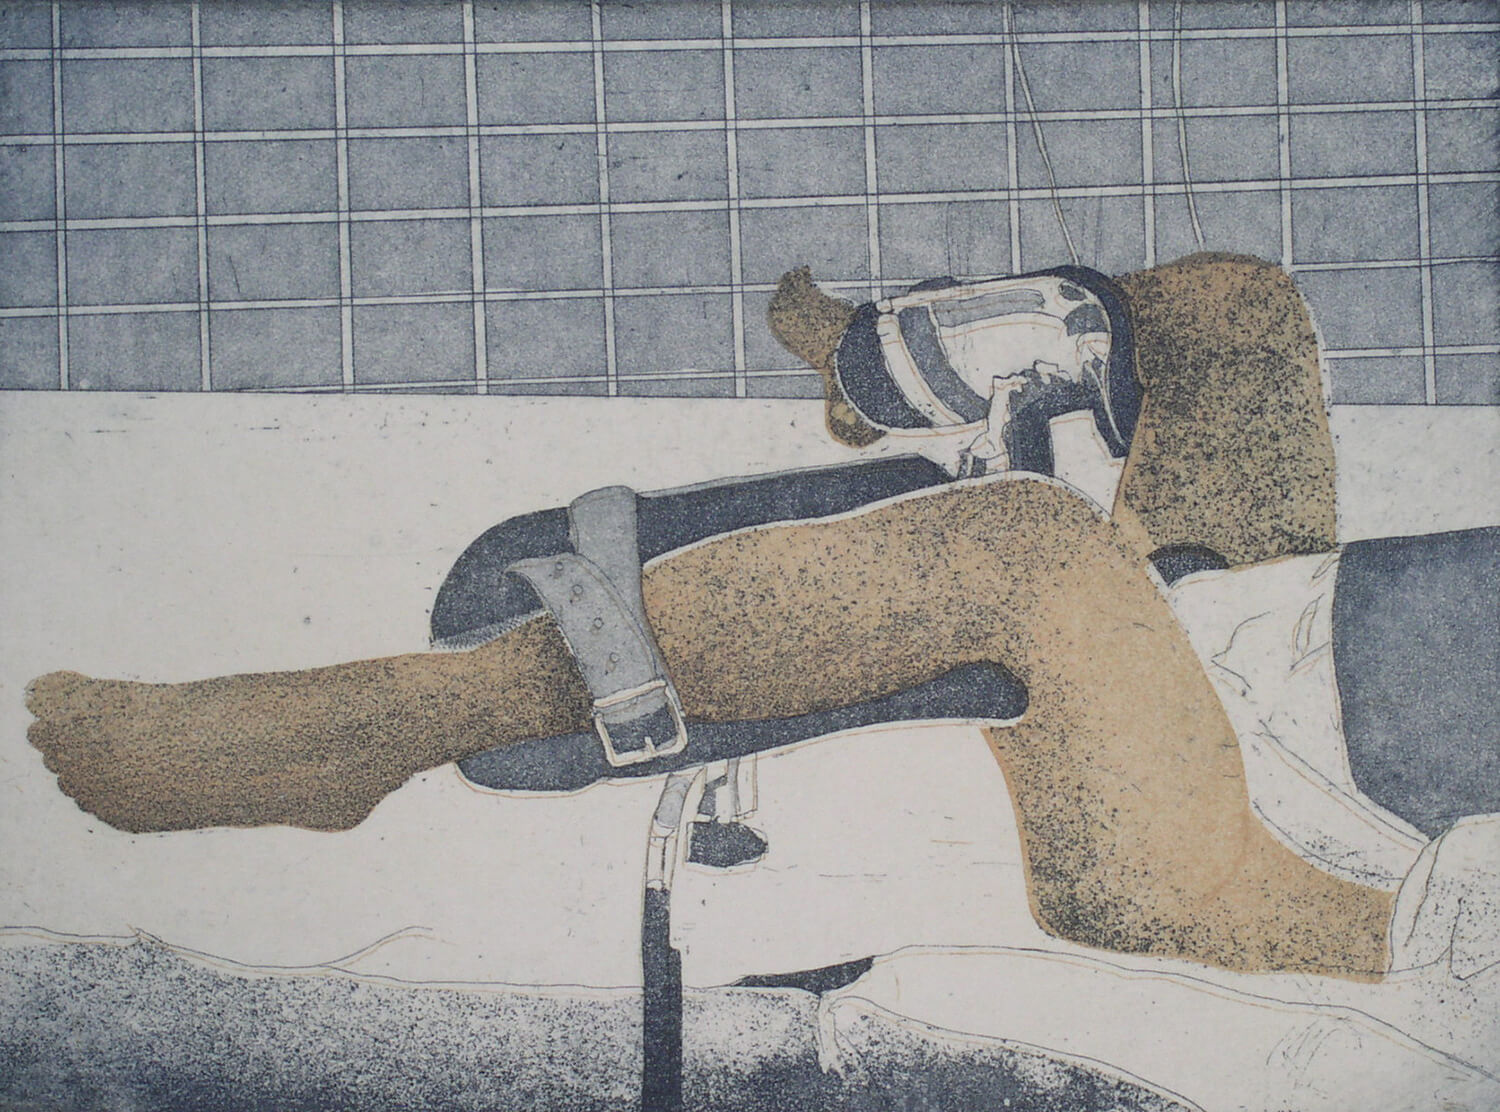 Maina-Miriam Munsky, Emanzipation, 1971, Farbradierung, Auflage: 30, Bild: 14,8 x 20 cm, Blatt: 26,2 x 27,9 cm